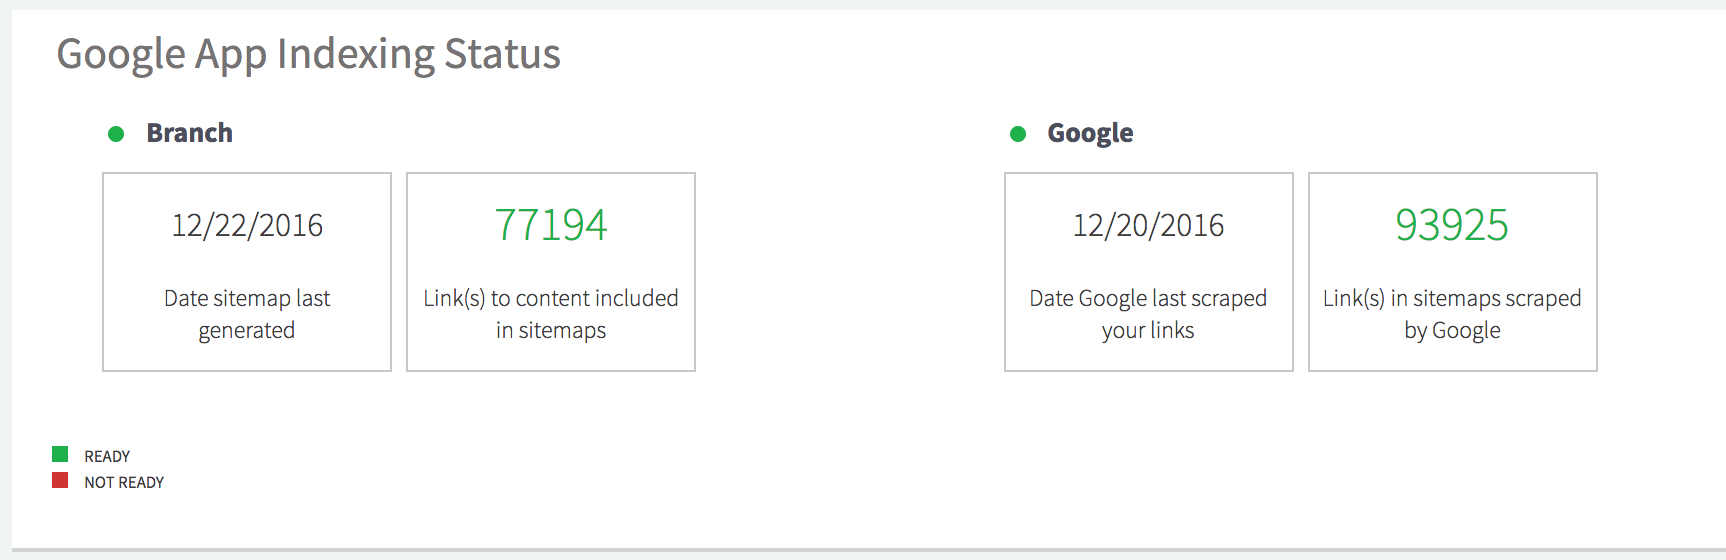 Google App Indexing Status